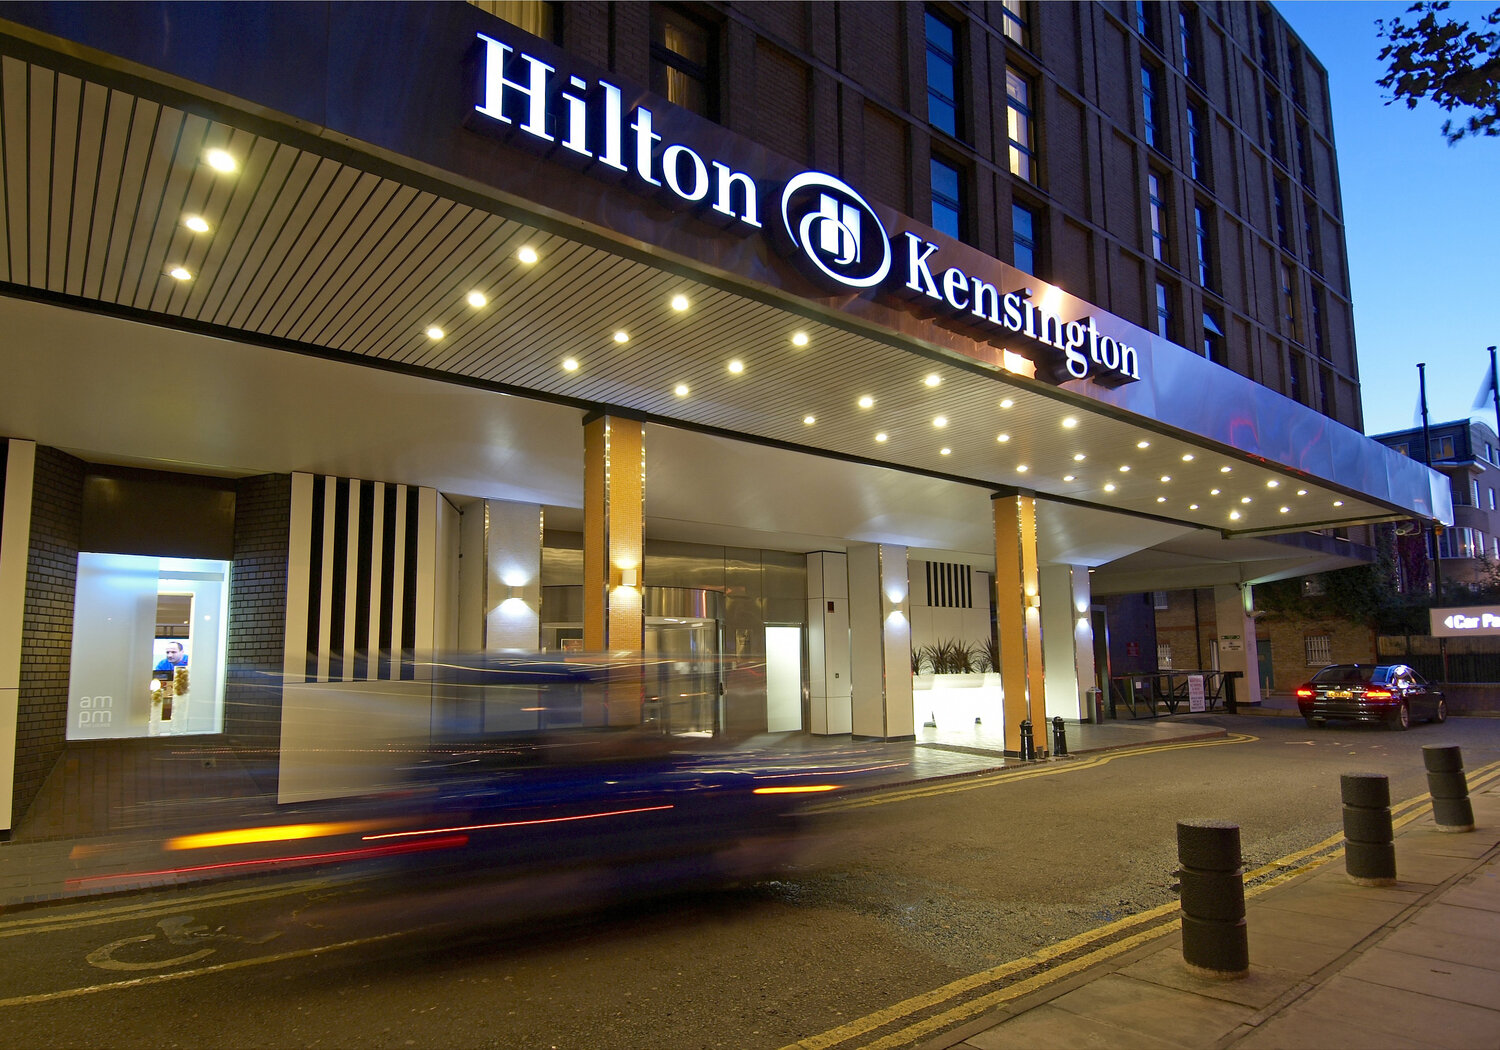 Hilton Kensington Hotel (Copy)